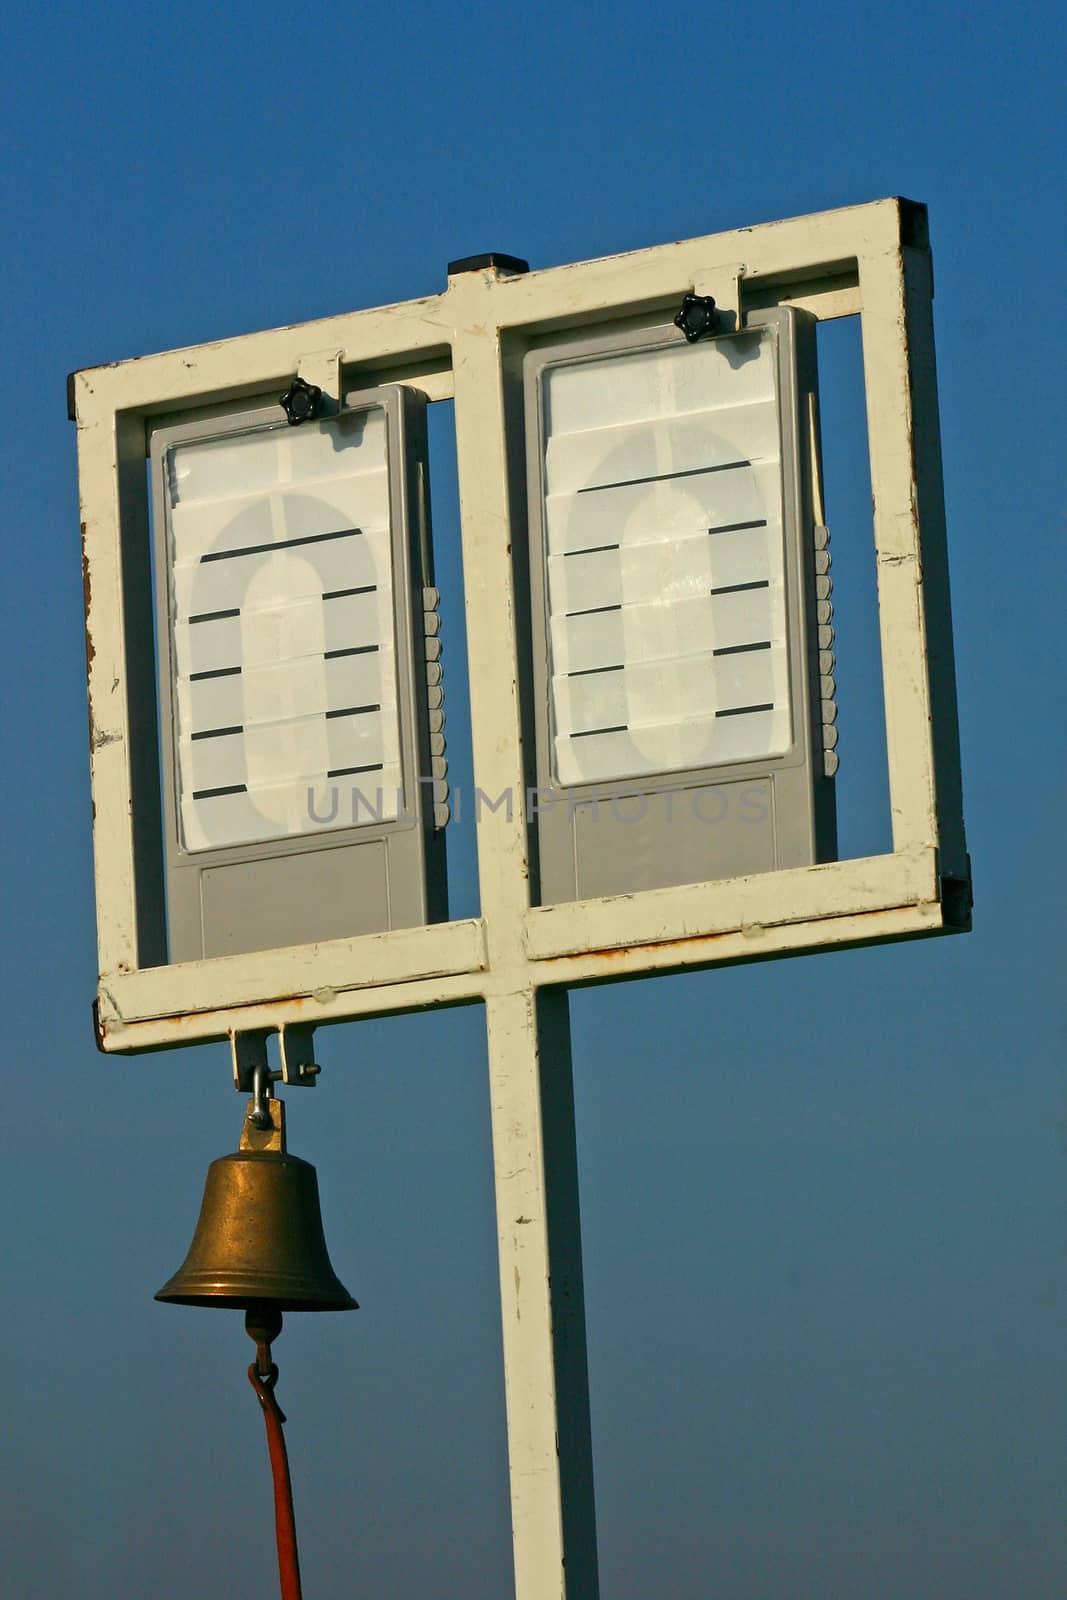 Last Round Bell with Scoreboard by Kartouchken